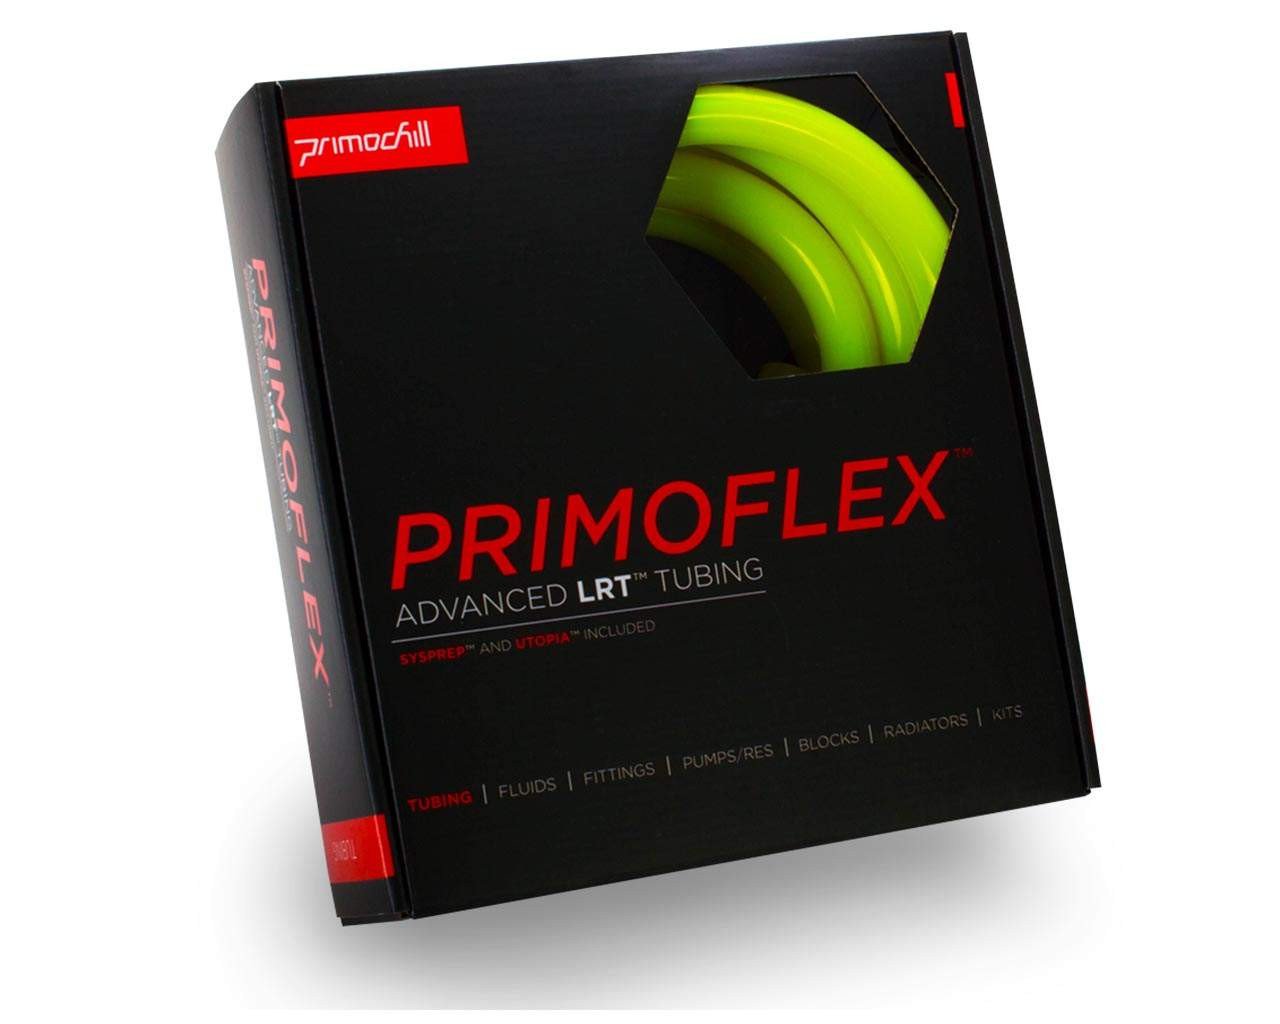 PrimoFlex Advanced LRT Soft Flexible Tubing -3/8in.ID x 1/2in.OD, 10 feet - PrimoChill - KEEPING IT COOL